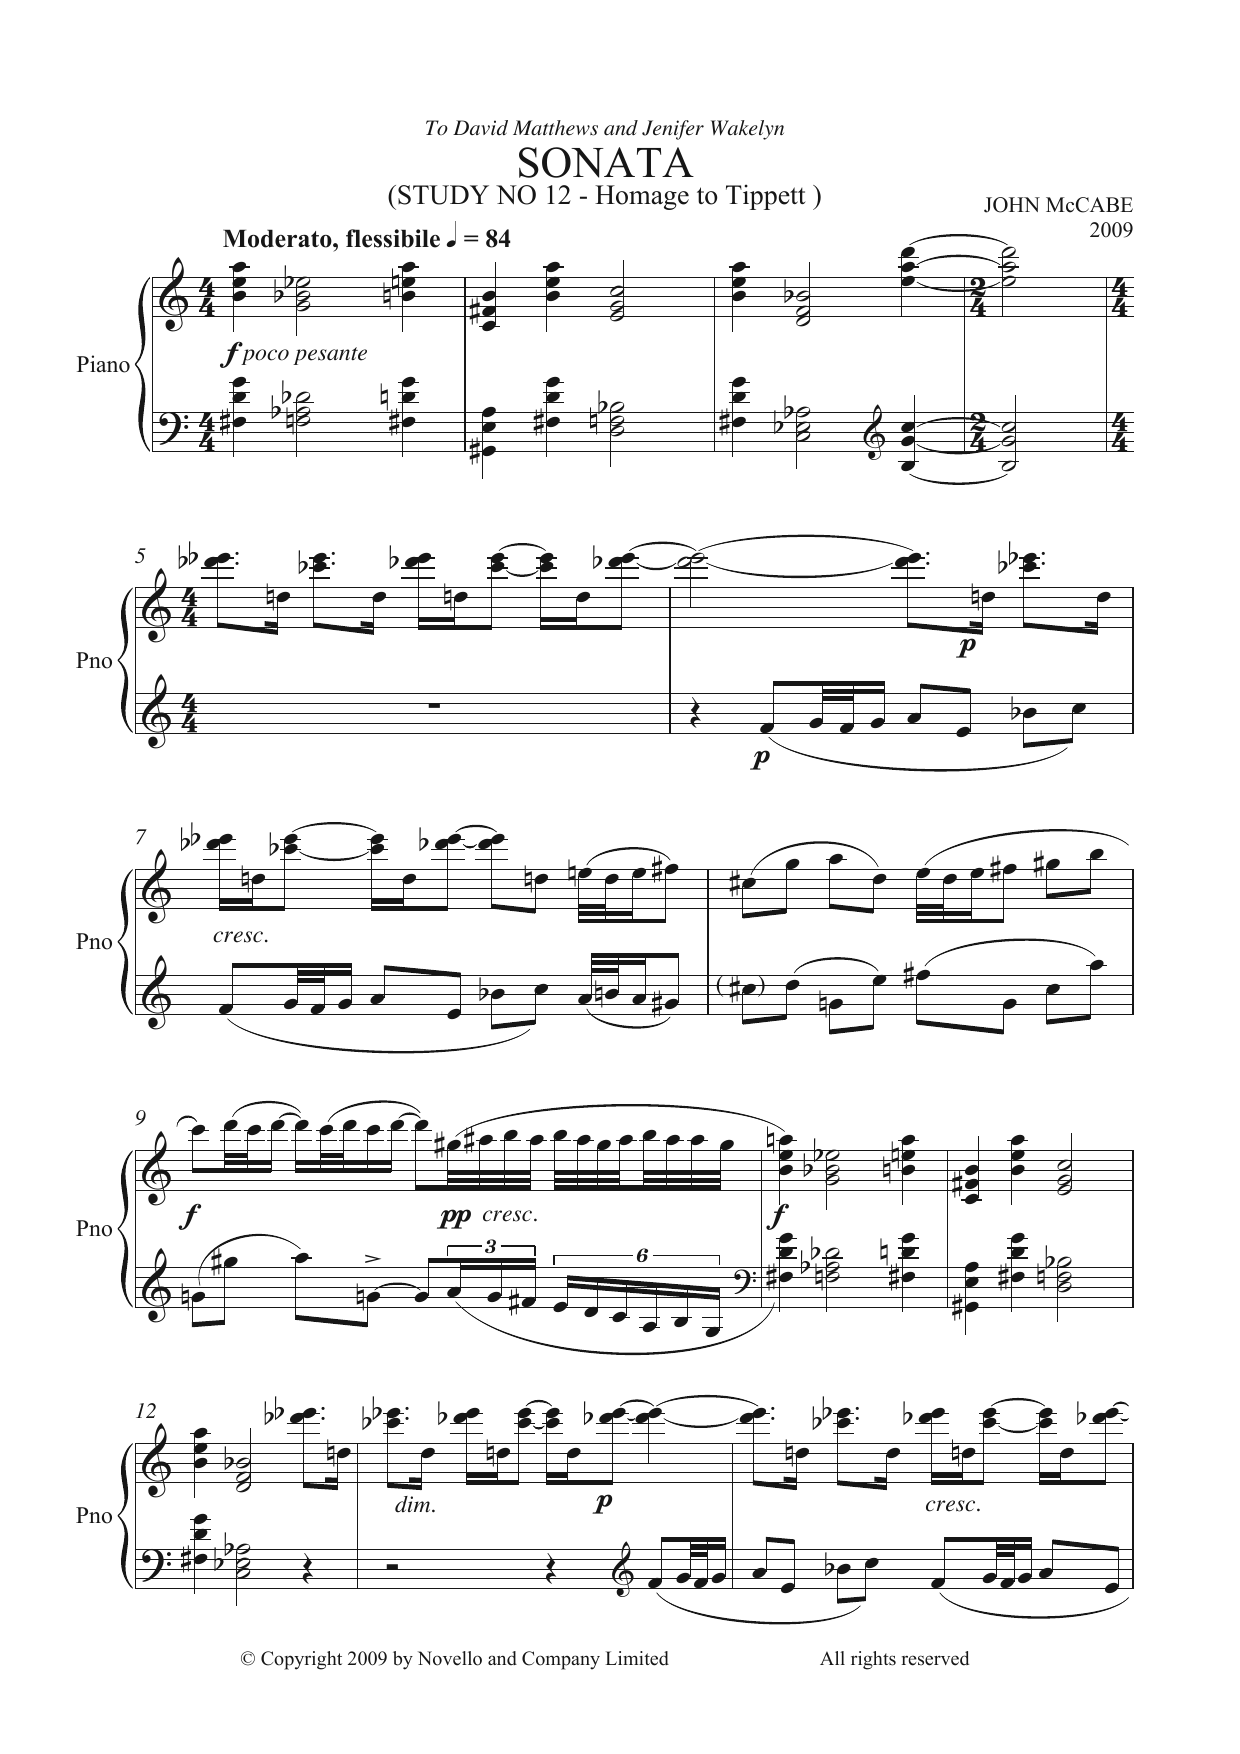 Download John McCabe Sonata (Study No. 12) Sheet Music